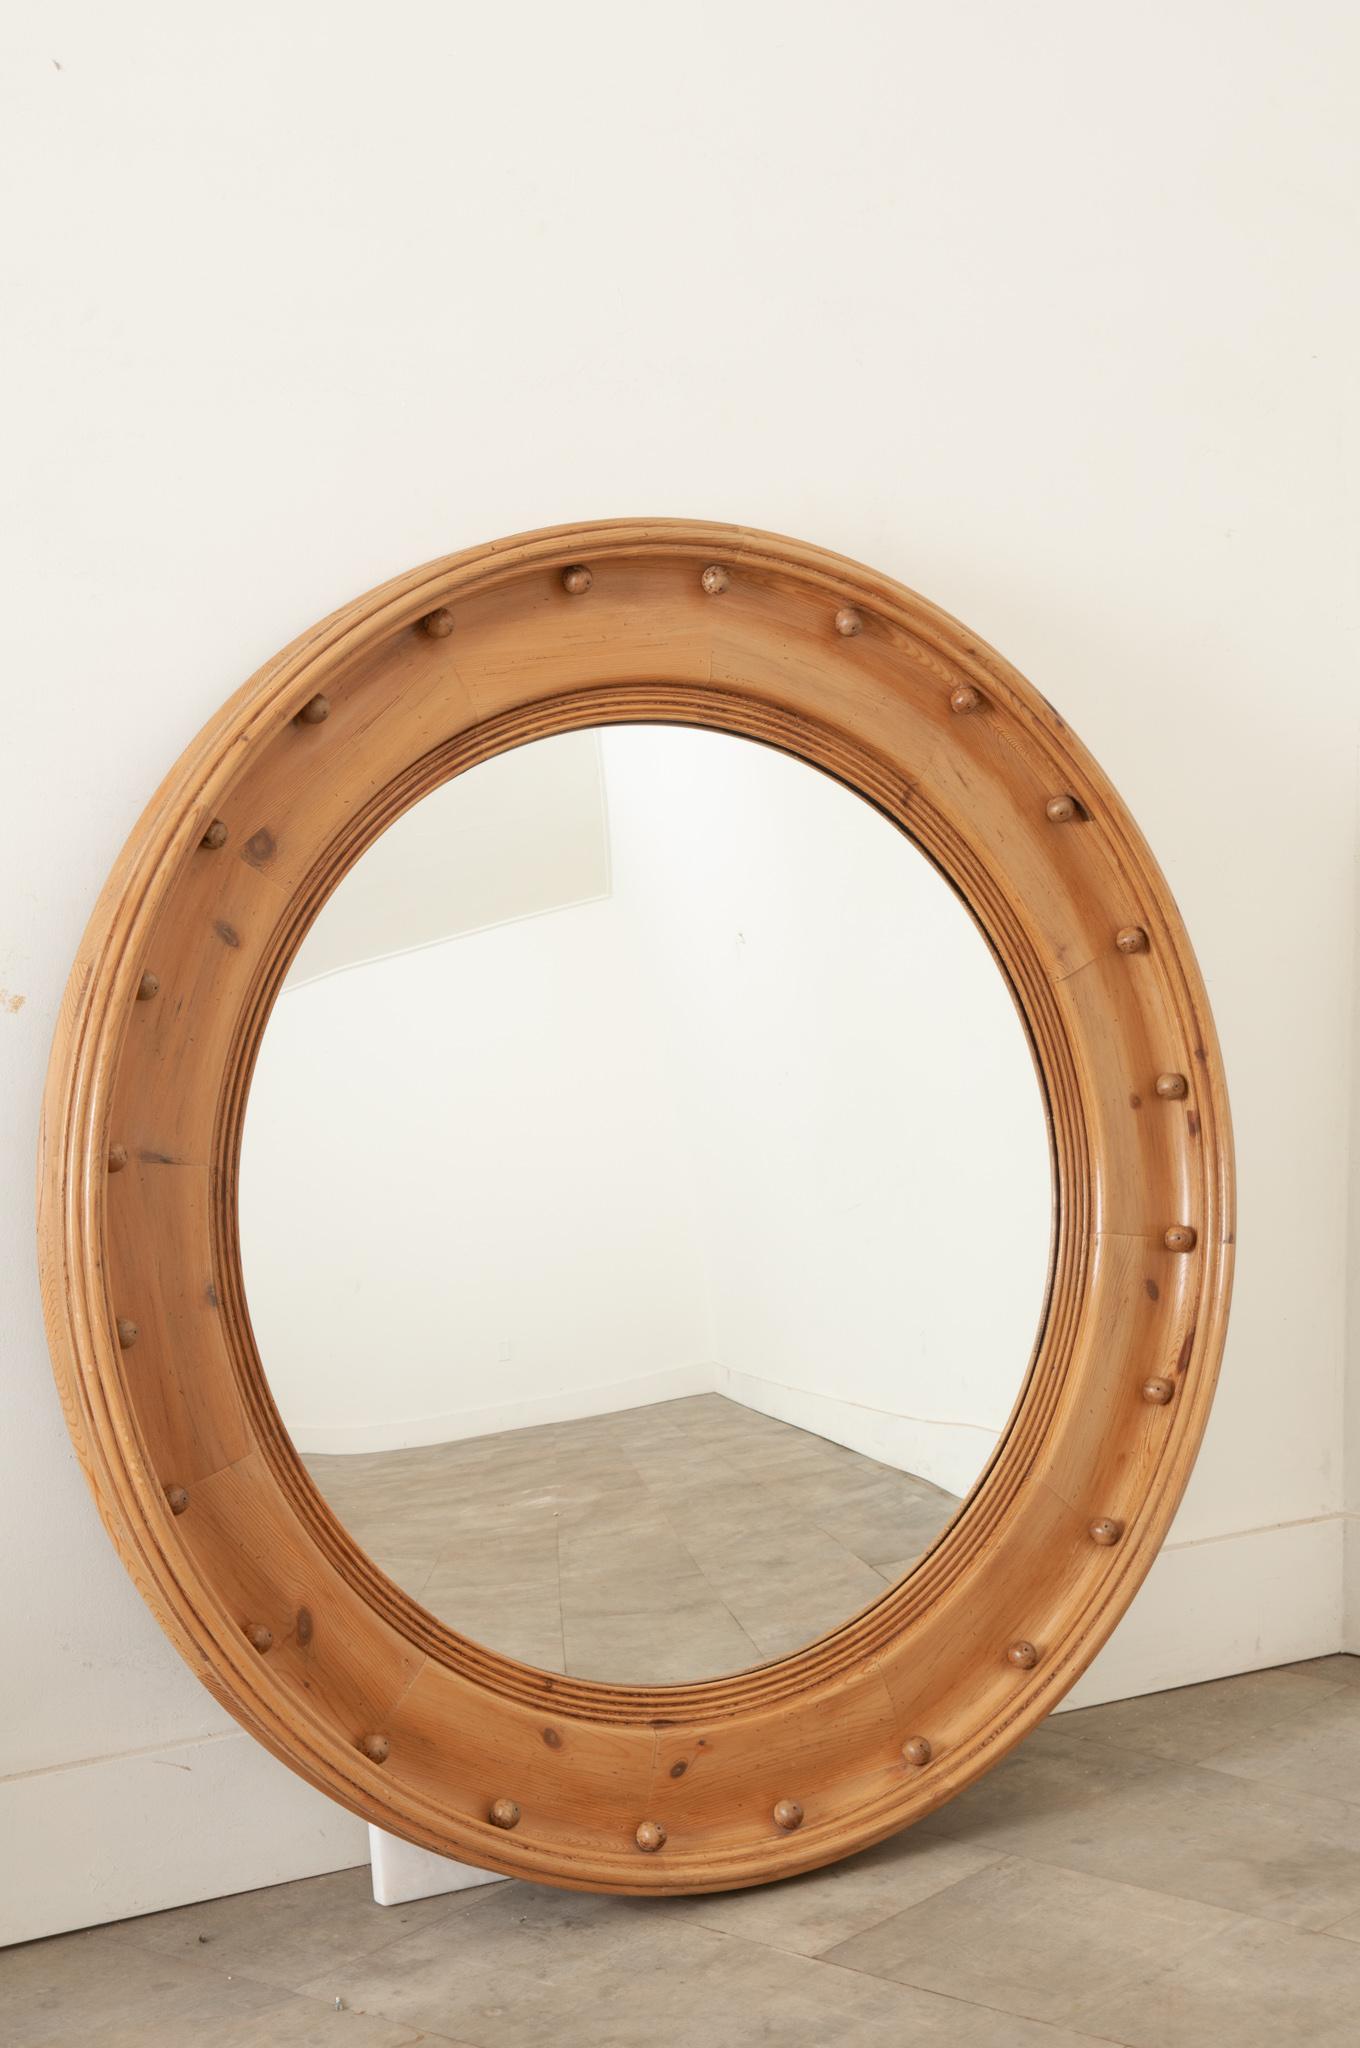 Other English Massive Pine Bullseye Convex Mirror